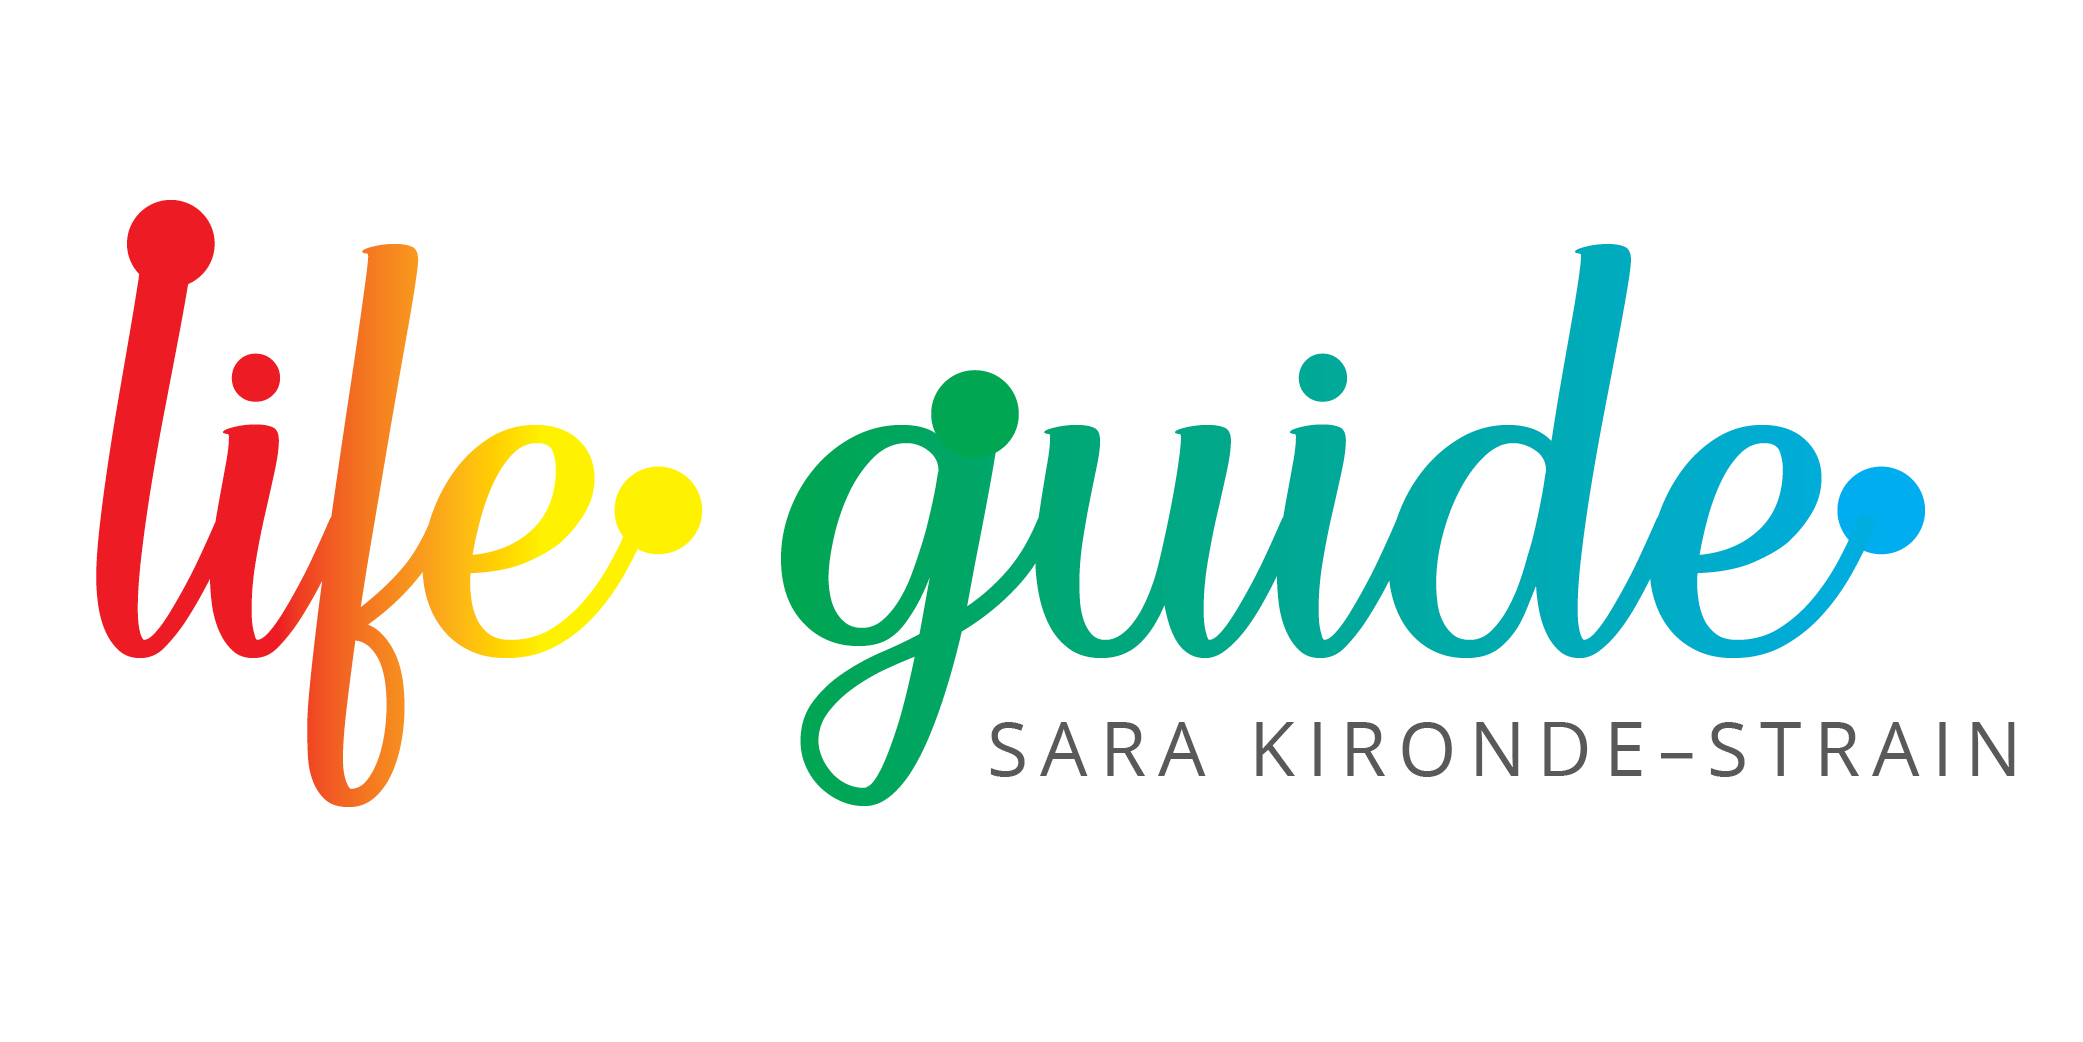 Sara Kironde-Strain